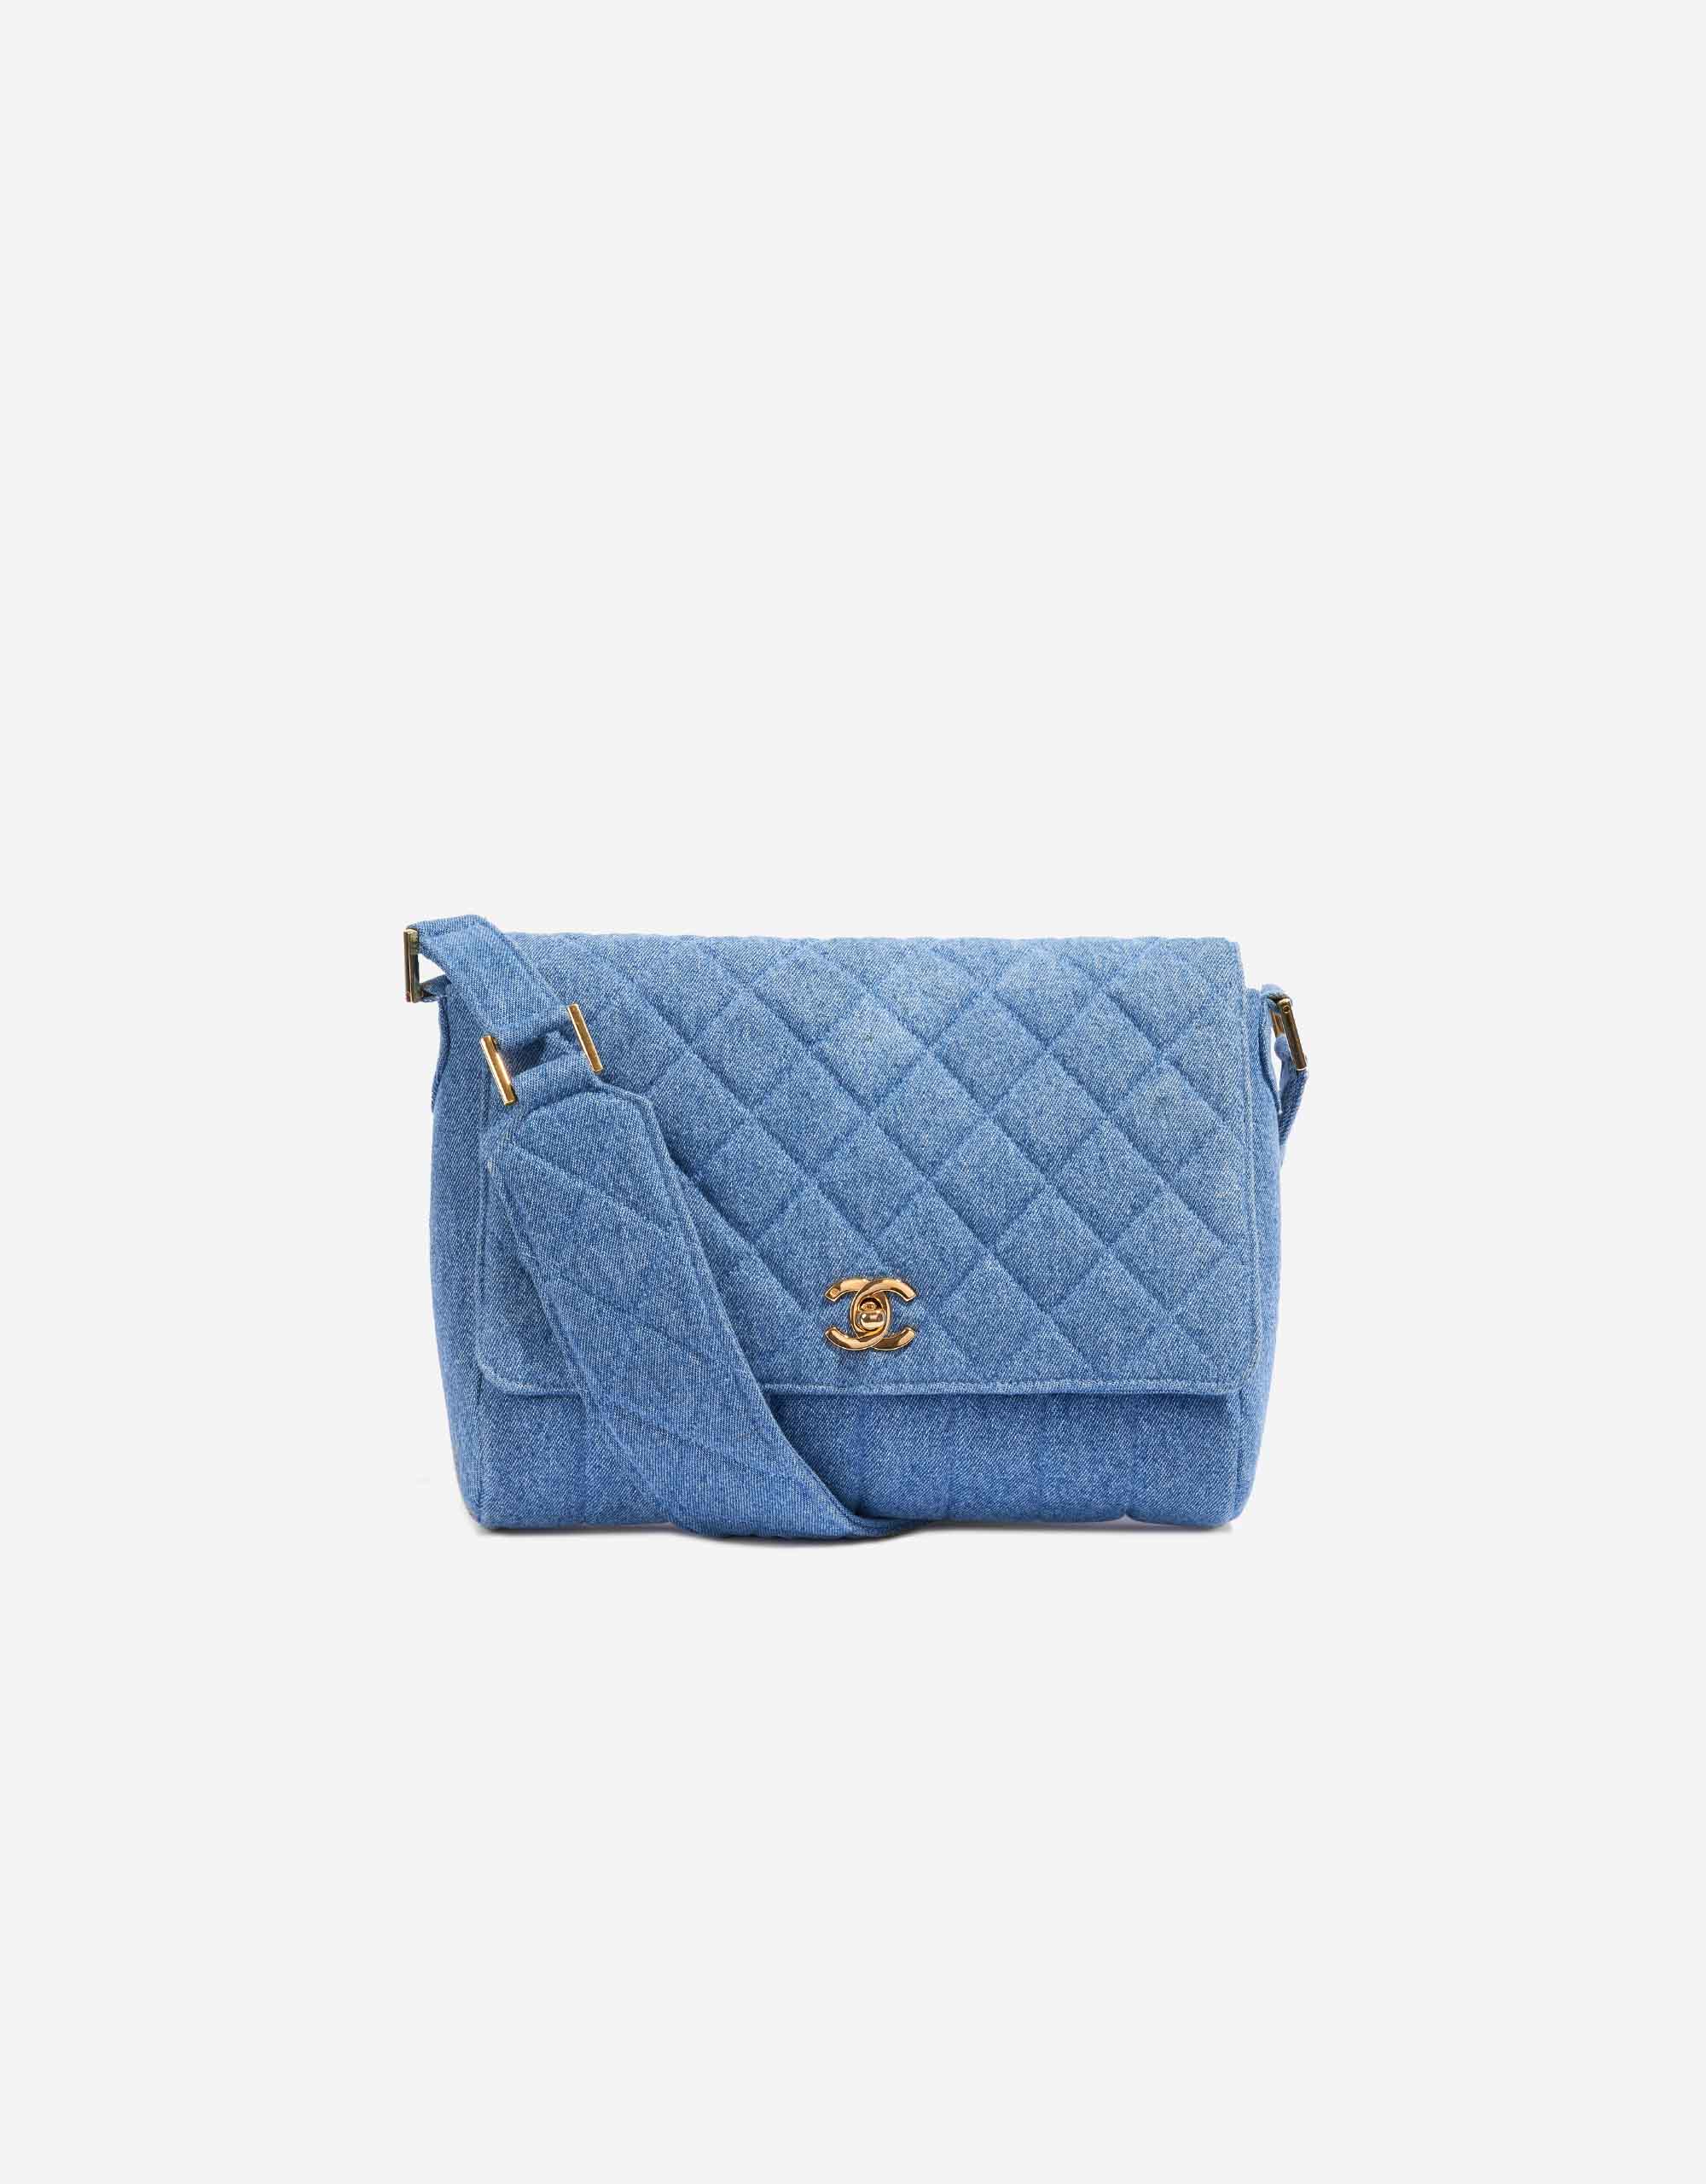 Chanel Vintage Flap Medium Denim Blue | SACLÀB